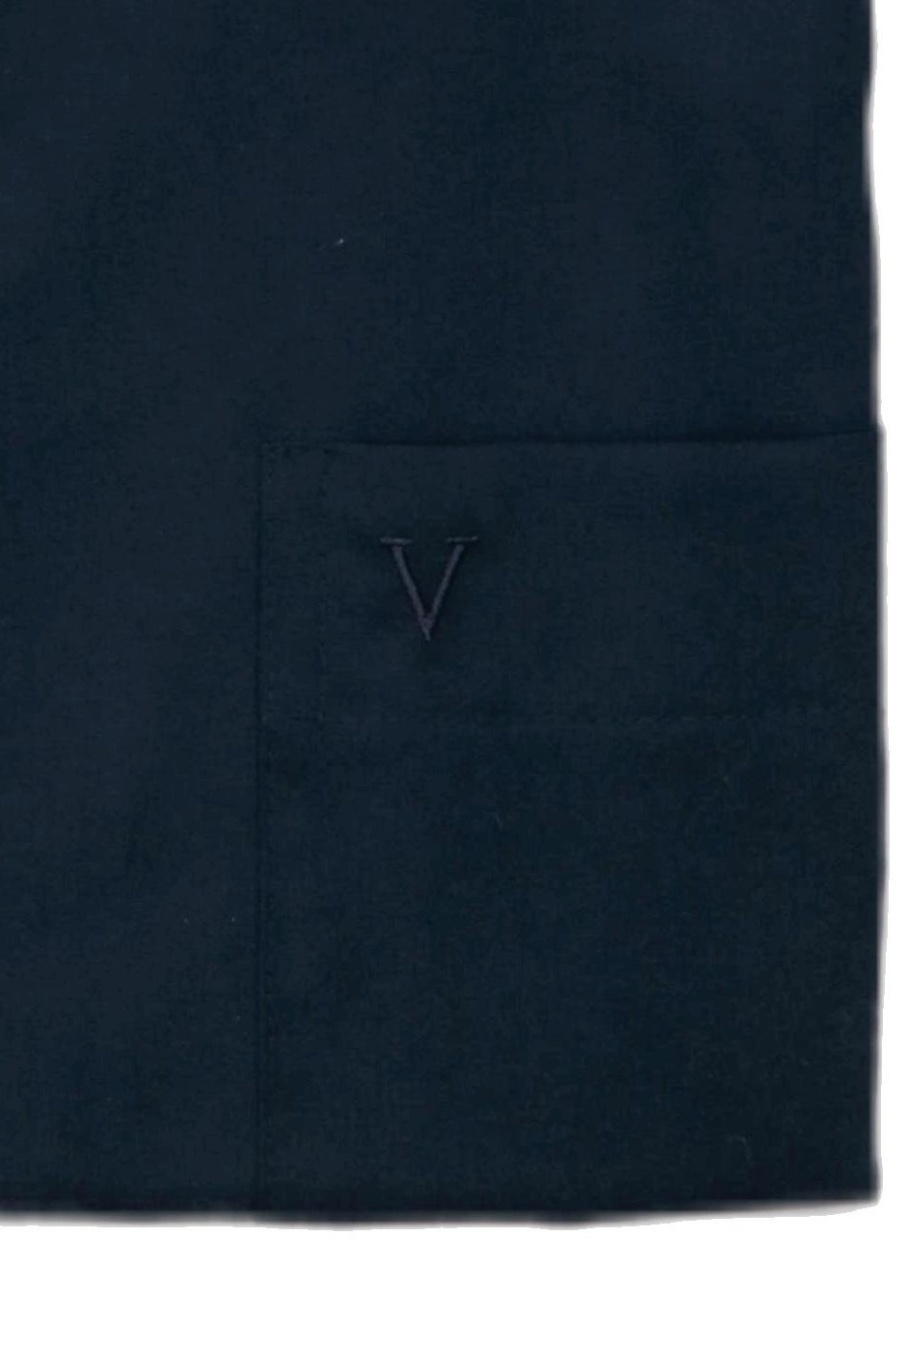 MARVELIS Modern Fit Hemd extra langer Arm New Kent Kragen nachtblau